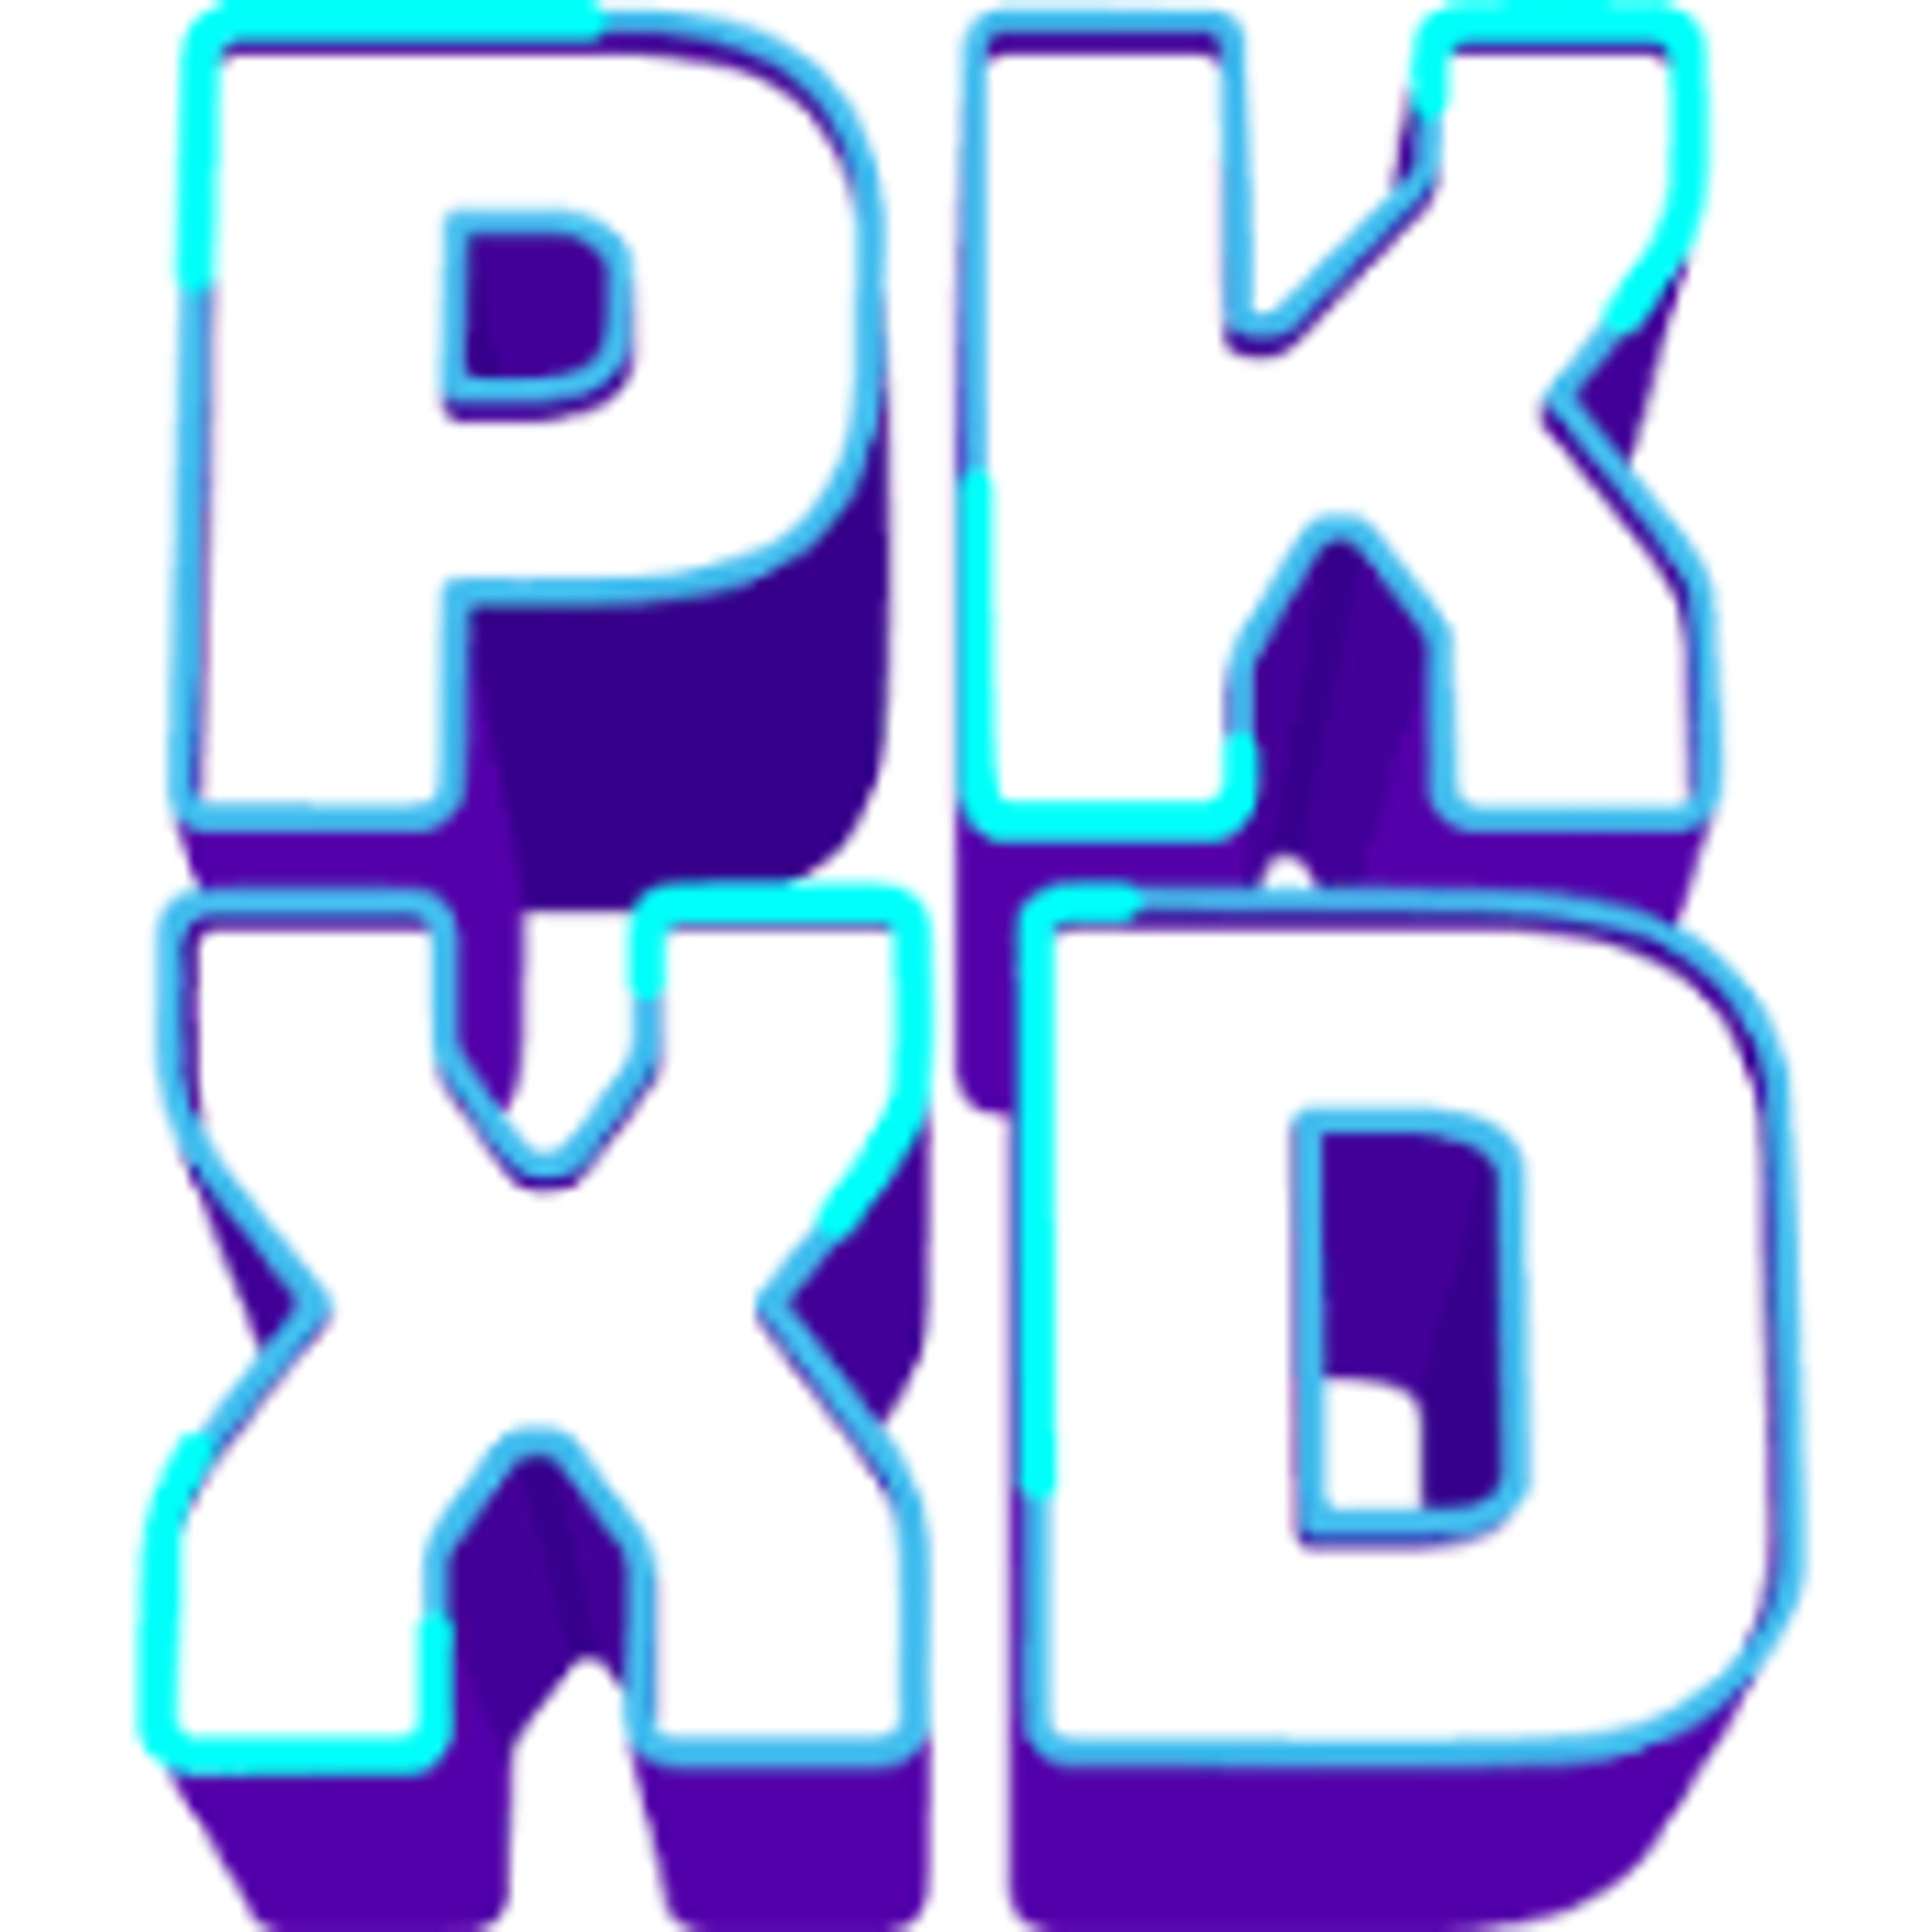 PK XD